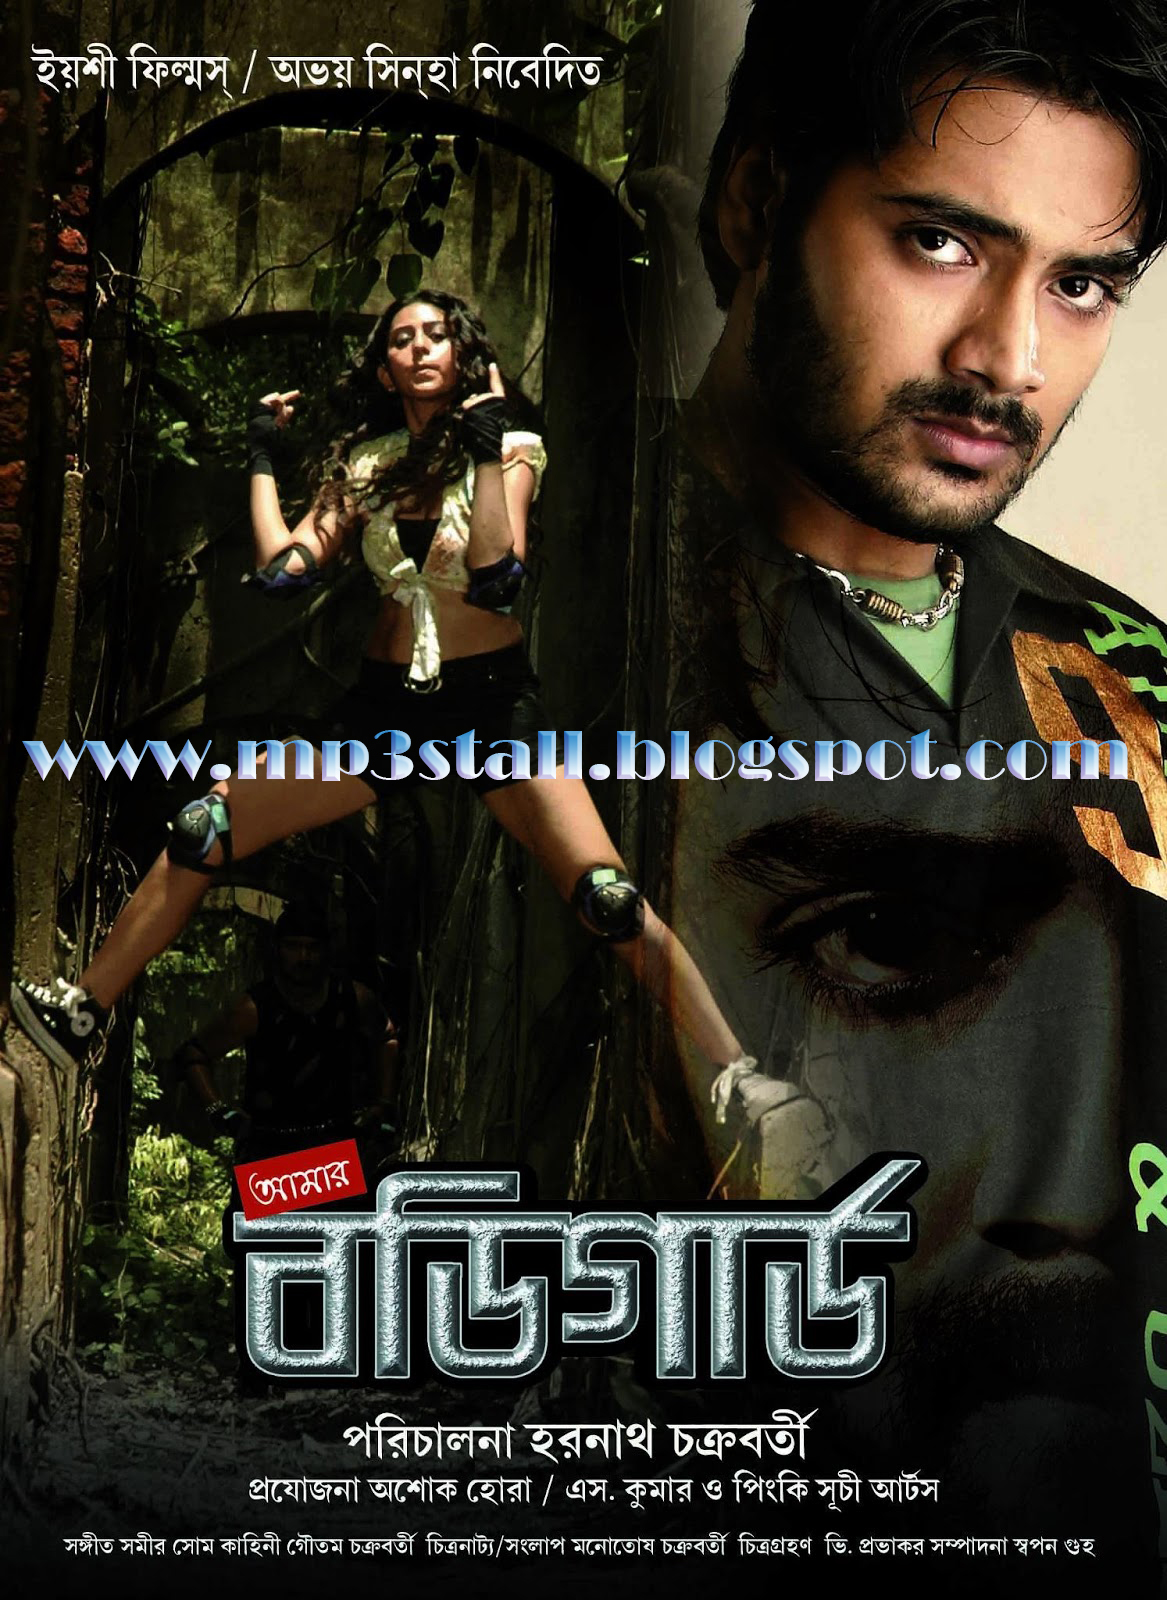 Bajrangi Bhaijaan Full Movie With English Subtitles Download Torrent